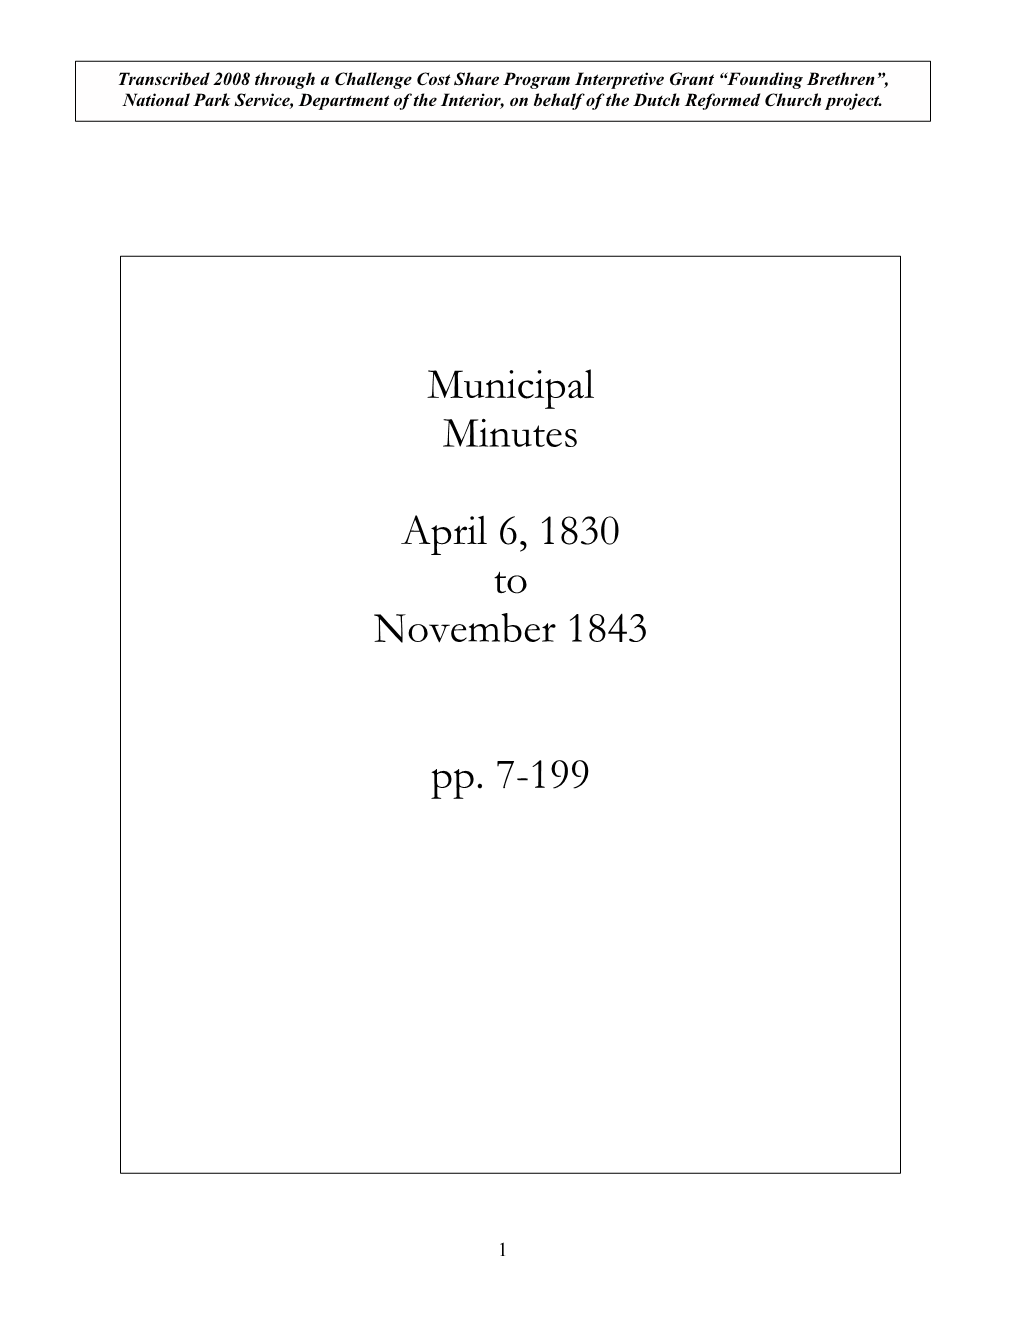 Municipal Minutes April 6, 1830 to November 1843 Pp. 7-199